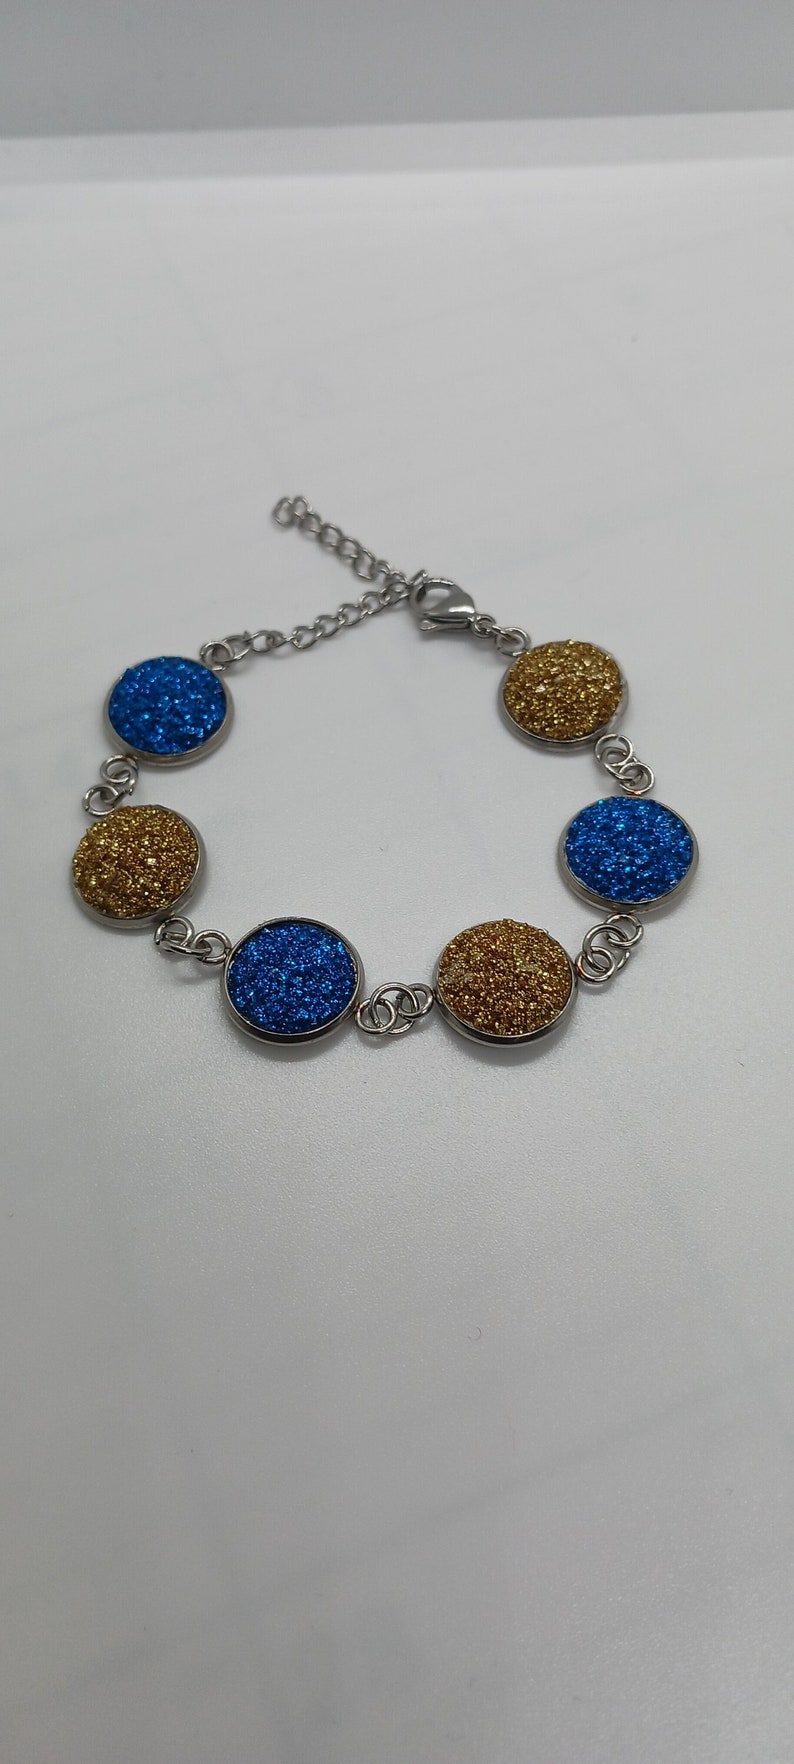 Ukraine bracelet, for Ukraine, cabochon bracelet, blue cabochons, yellow cabochons, silver setting bracelet, image 1